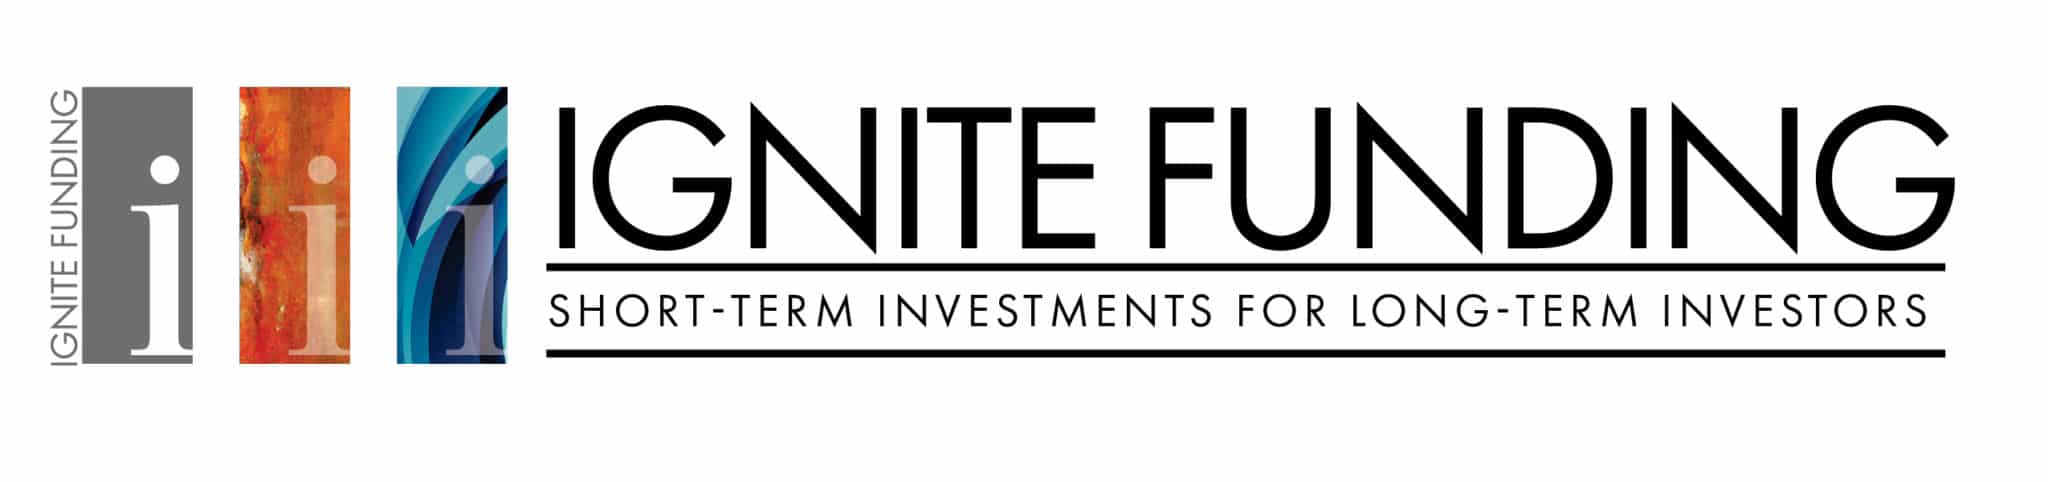 Ignite Funding Logo